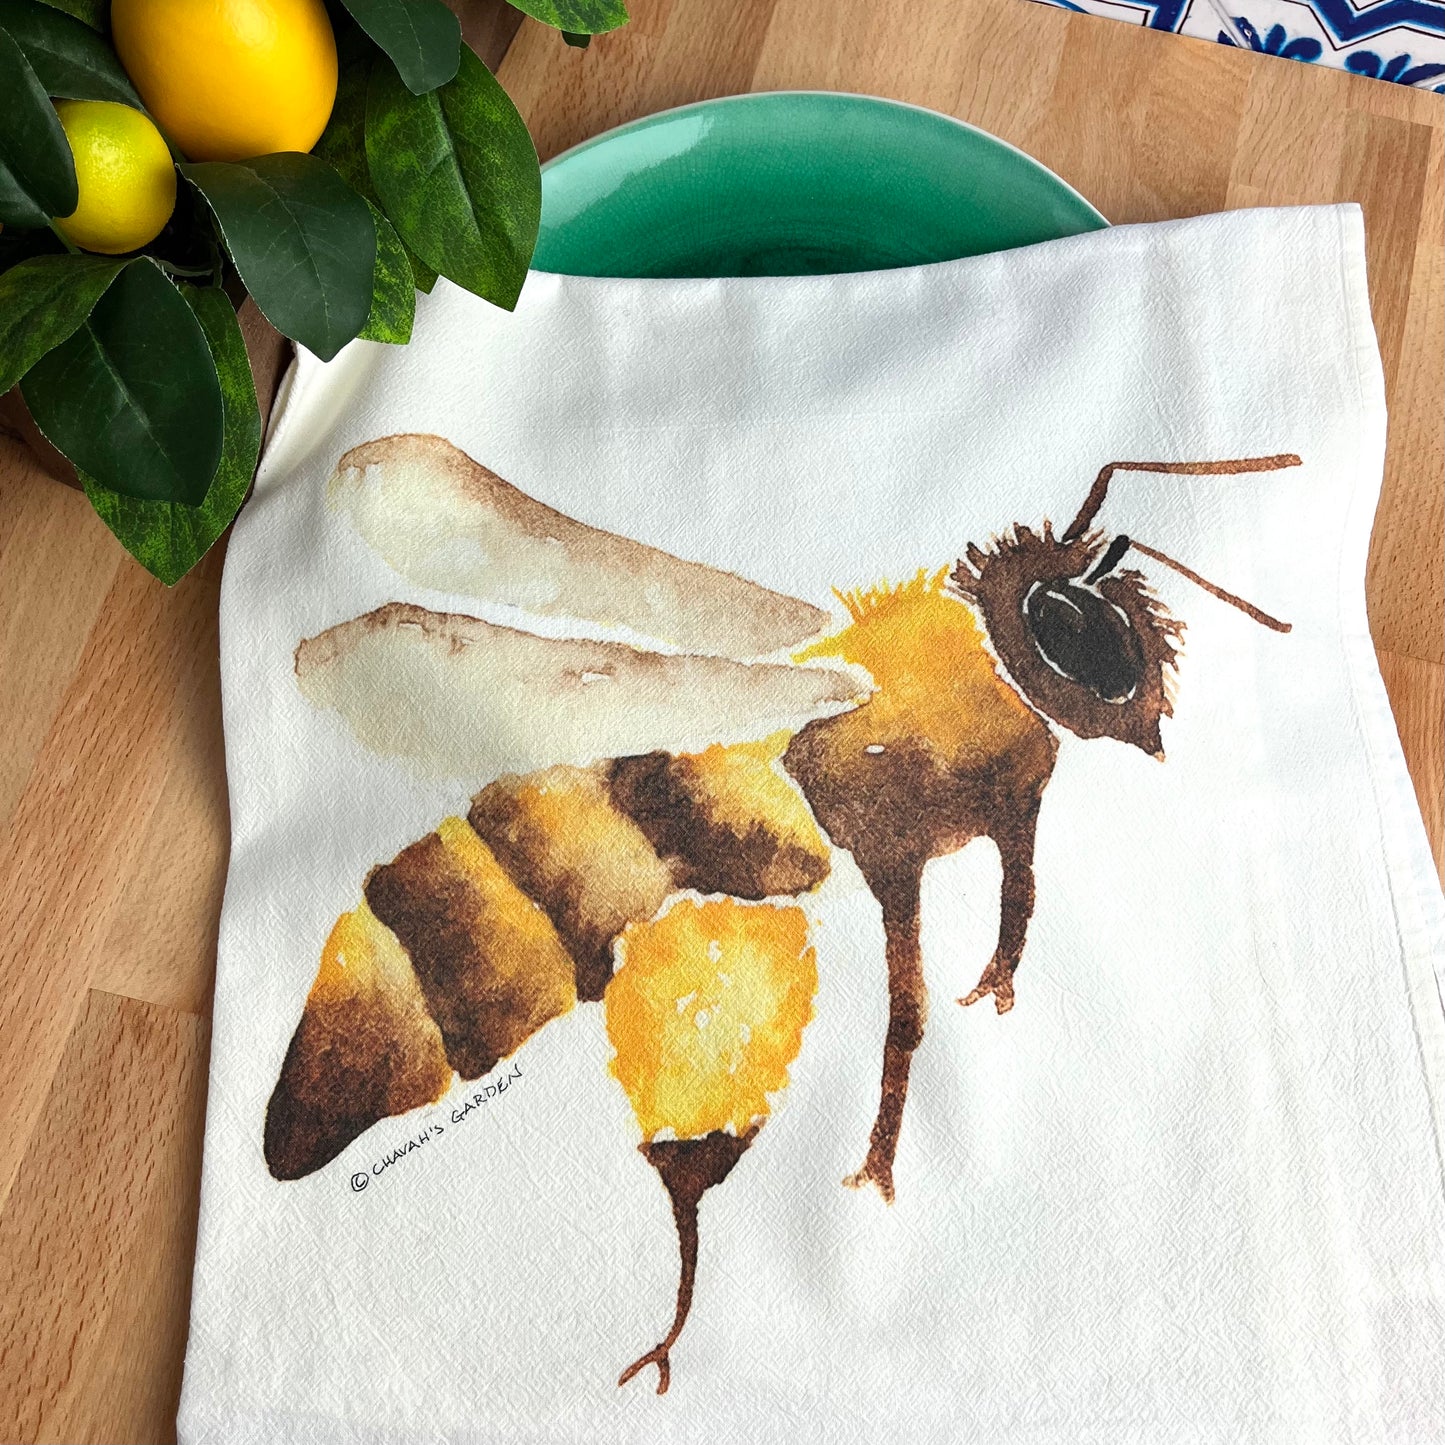 Flour Sack Tea Towels, Honey Bee, Garden Theme